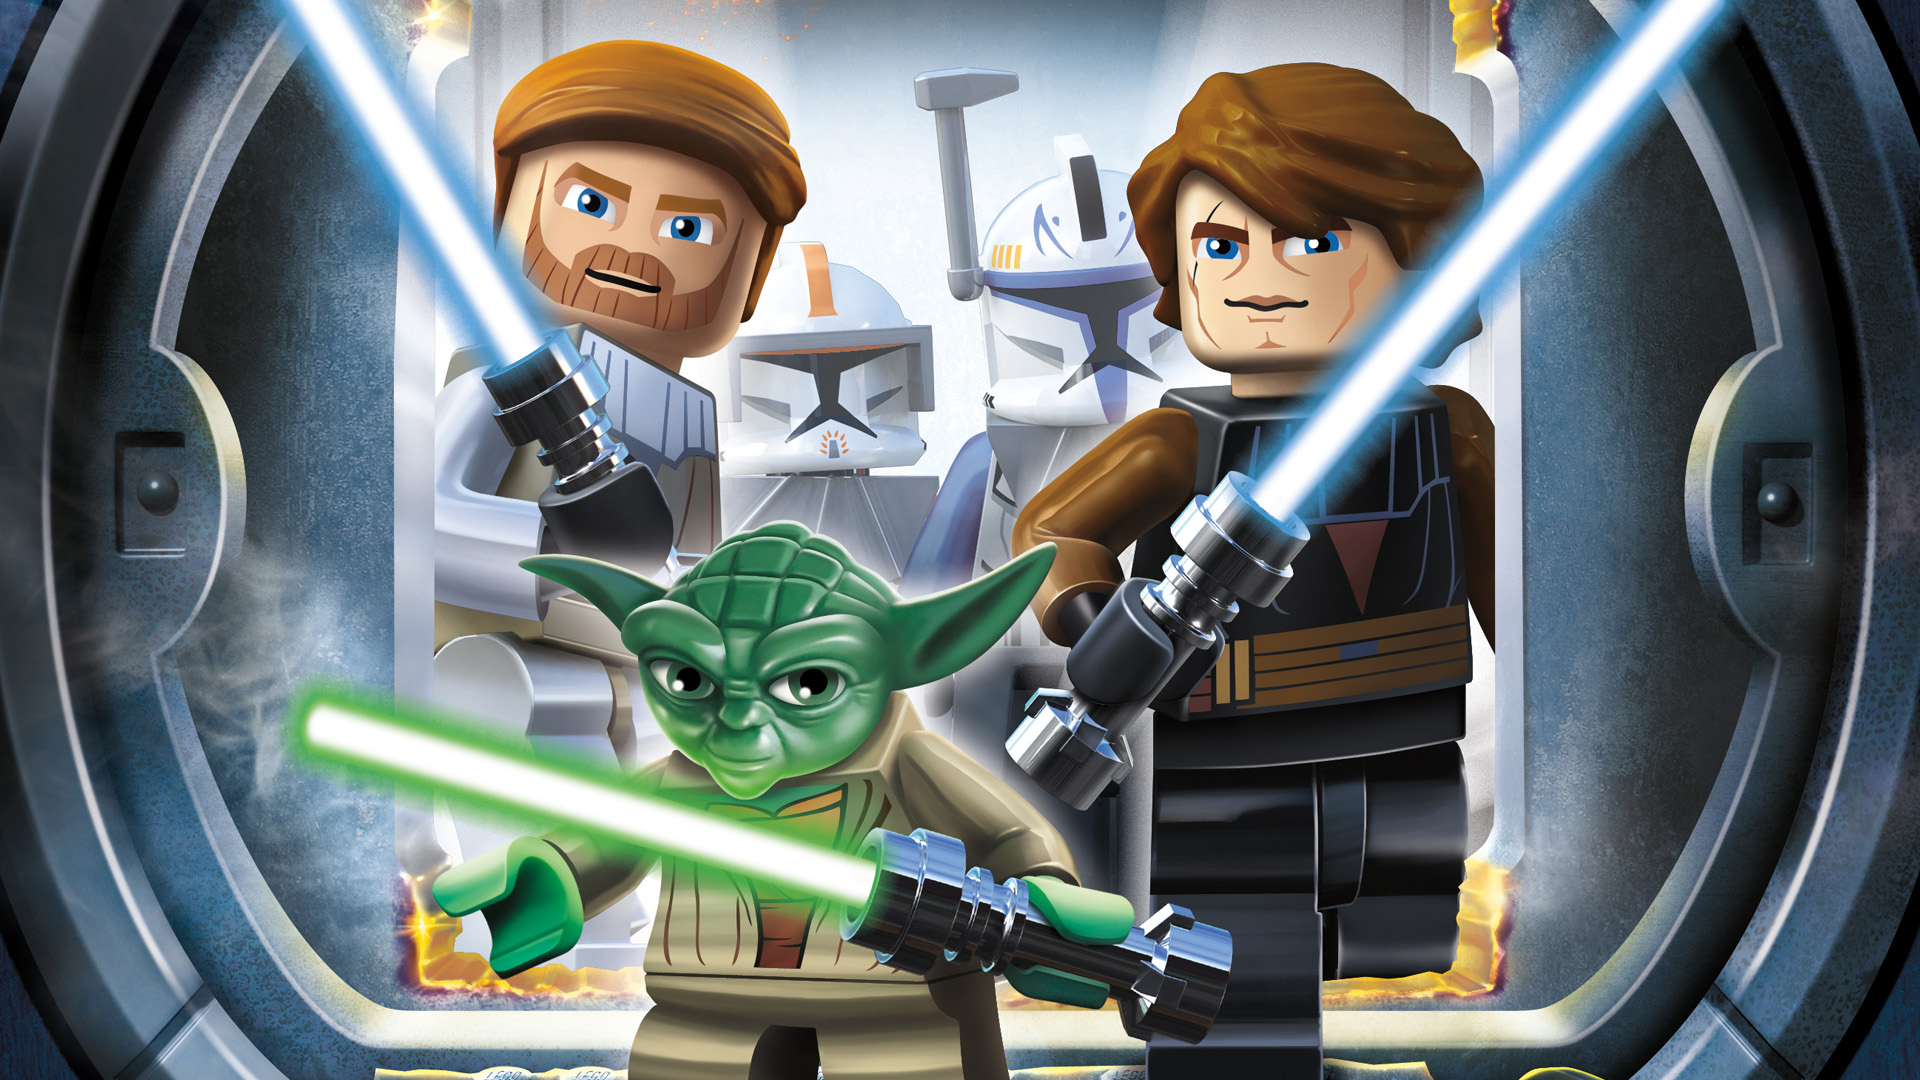 Télécharger des fonds d'écran Lego Star Wars Iii: The Clone Wars HD